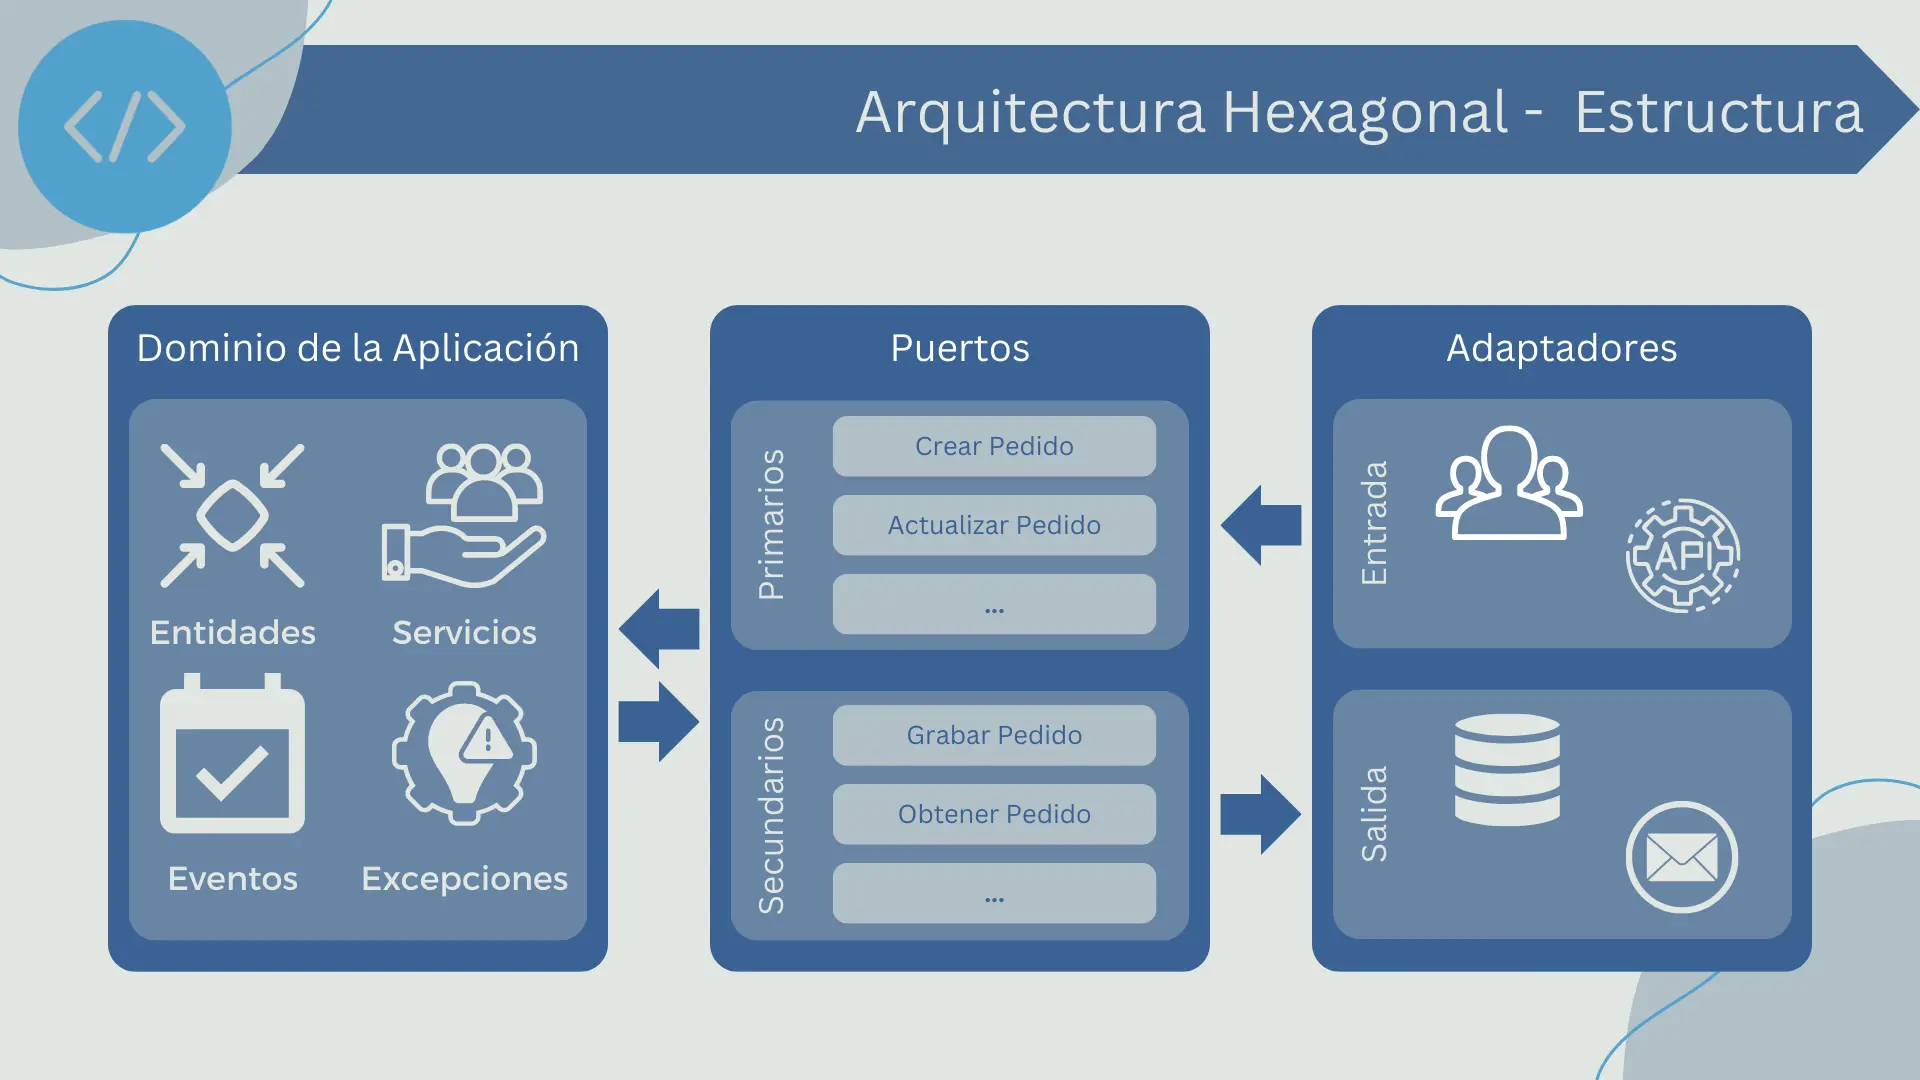 Estructura de la arquitectura hexagonal